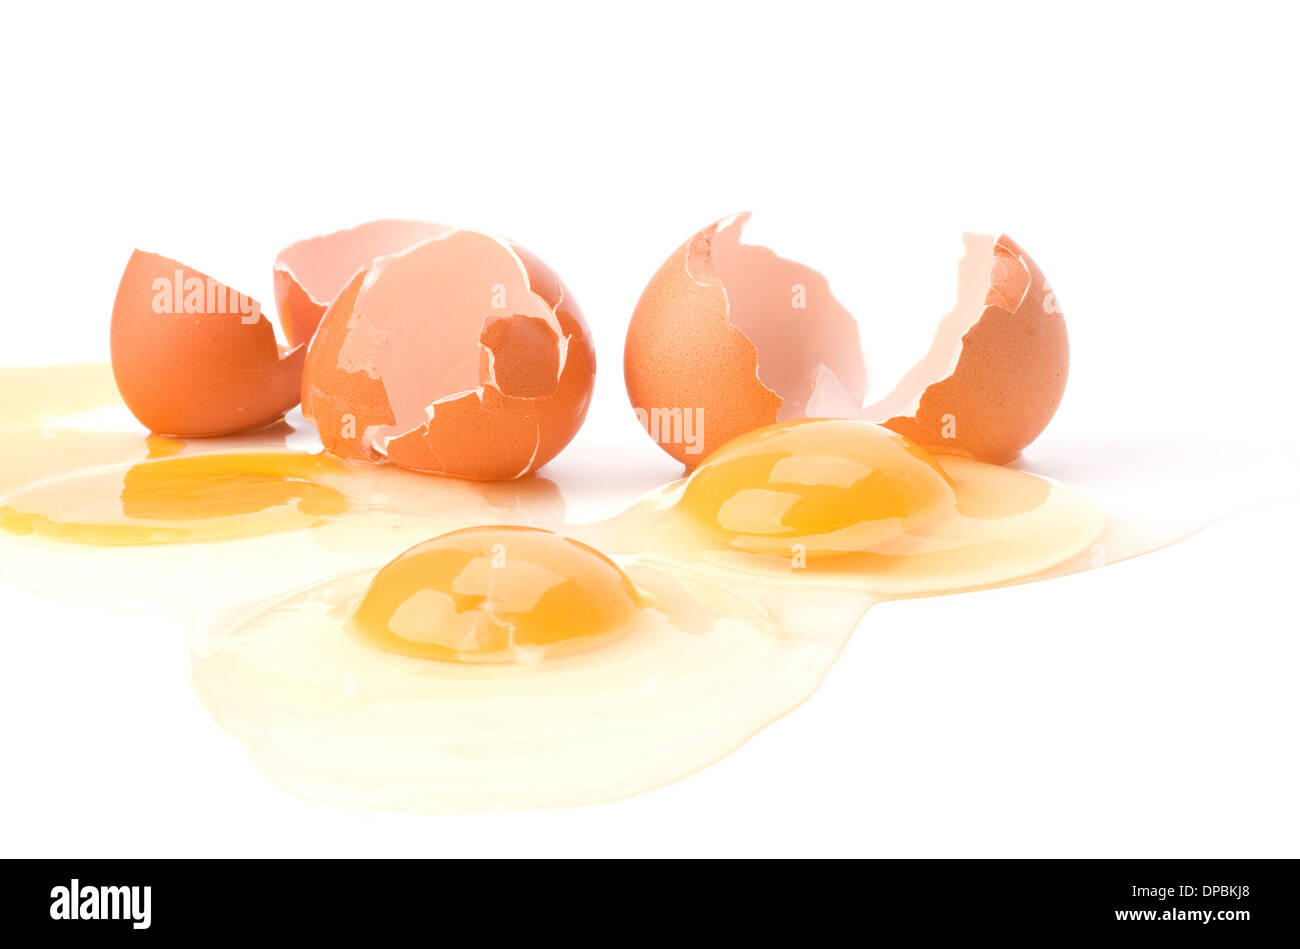 Разбей яйцо 2. Разбитое яйцо на белом фоне. Разбитые яйца. Два разбитых яйца. Красиво разбитое яйцо.